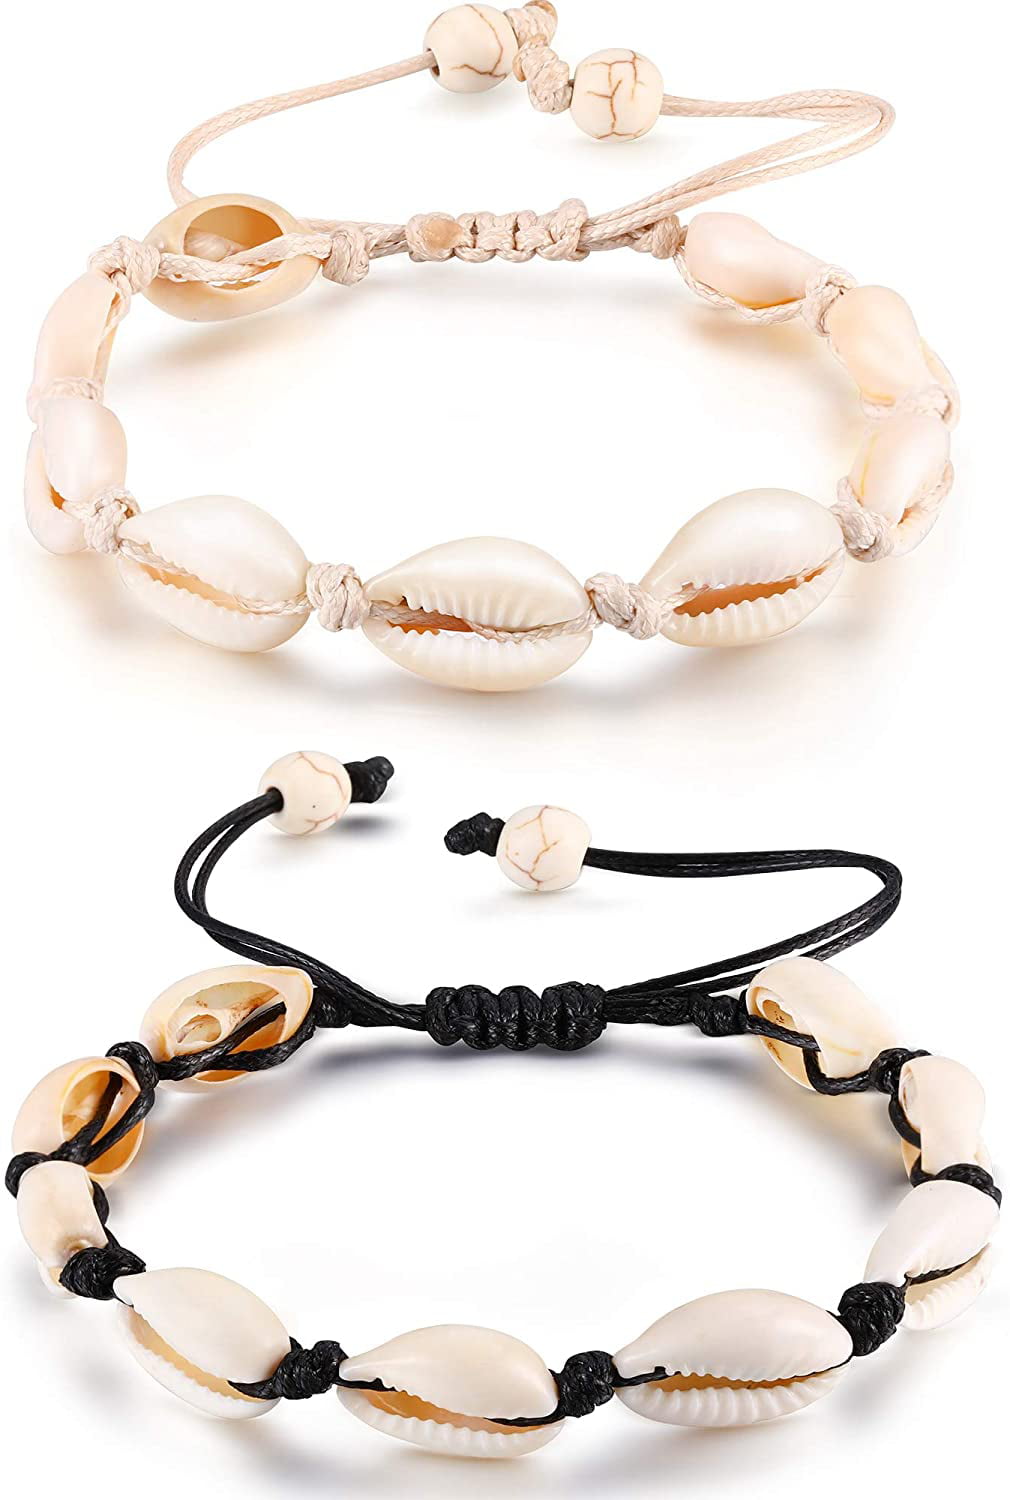 Pink Crochet Friendship Wrap Bracelet With Transparent Beads Boho summer beach jewelry Gift for best friend